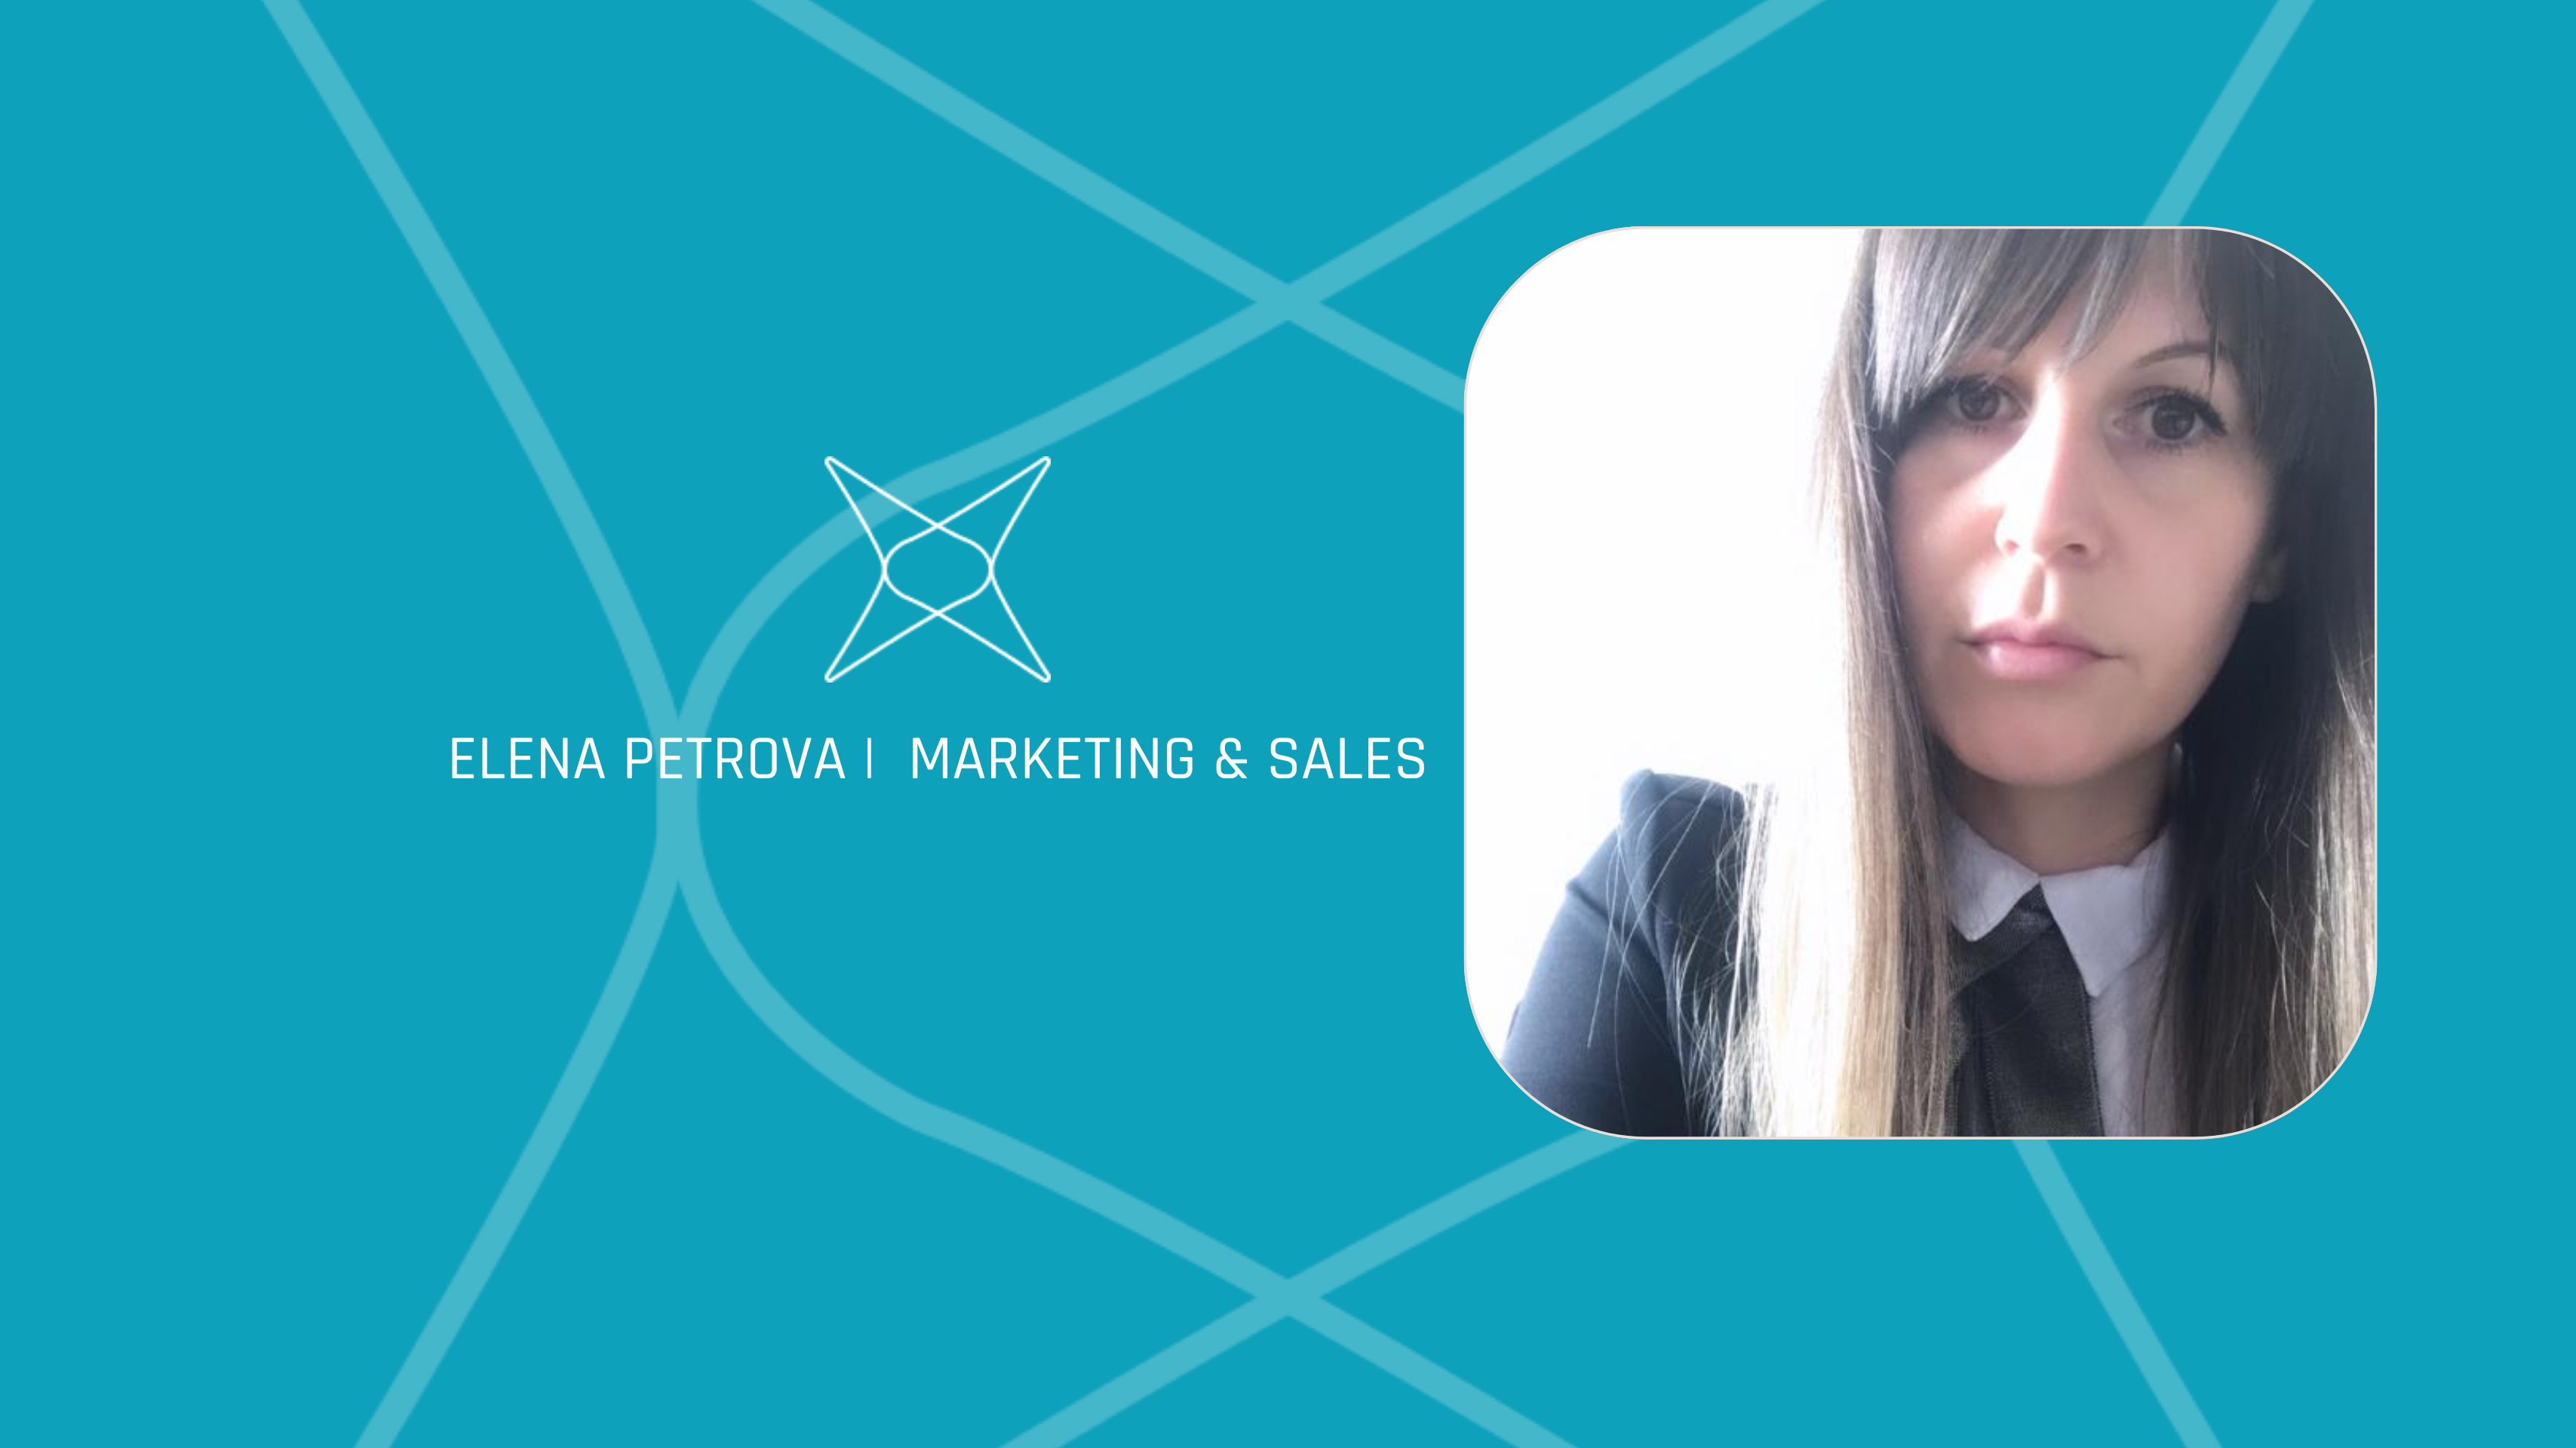 Our team – Elena Petrova